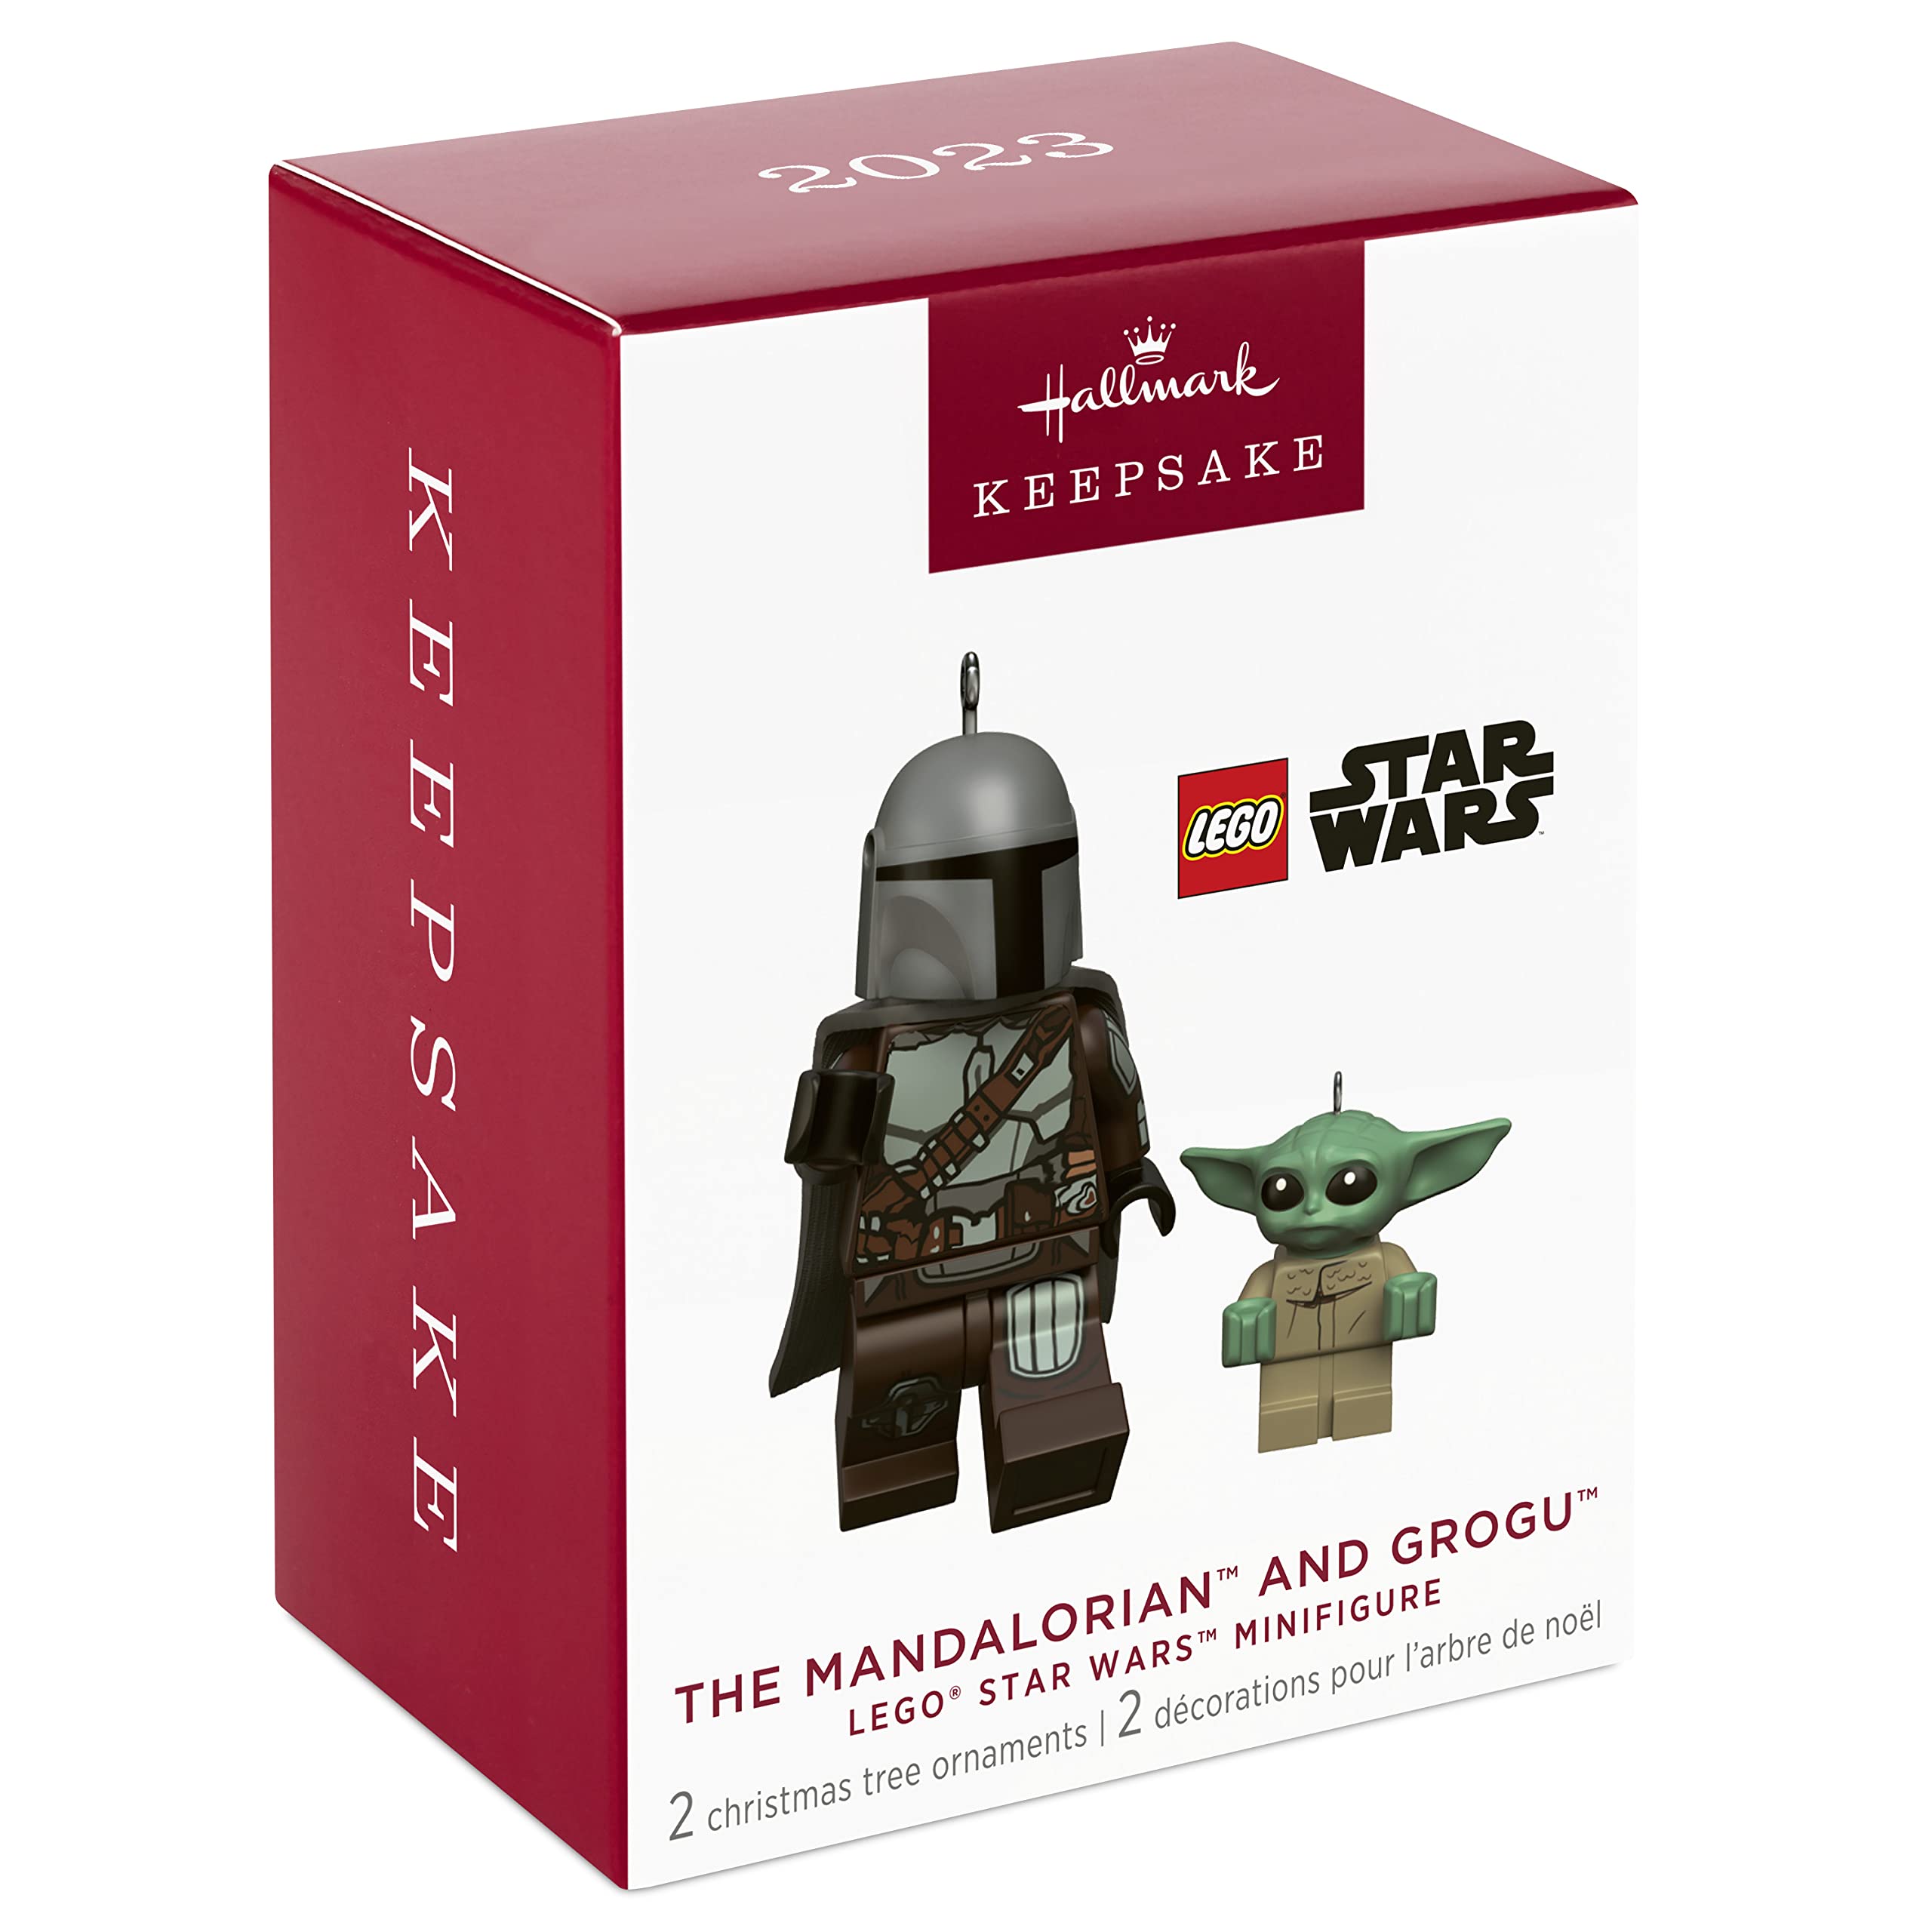 Hallmark Keepsake Christmas Ornaments 2023, The Mandalorian and Grogu Lego Star Wars Minifigure, Set of 2, Gifts for Star Wars Fans